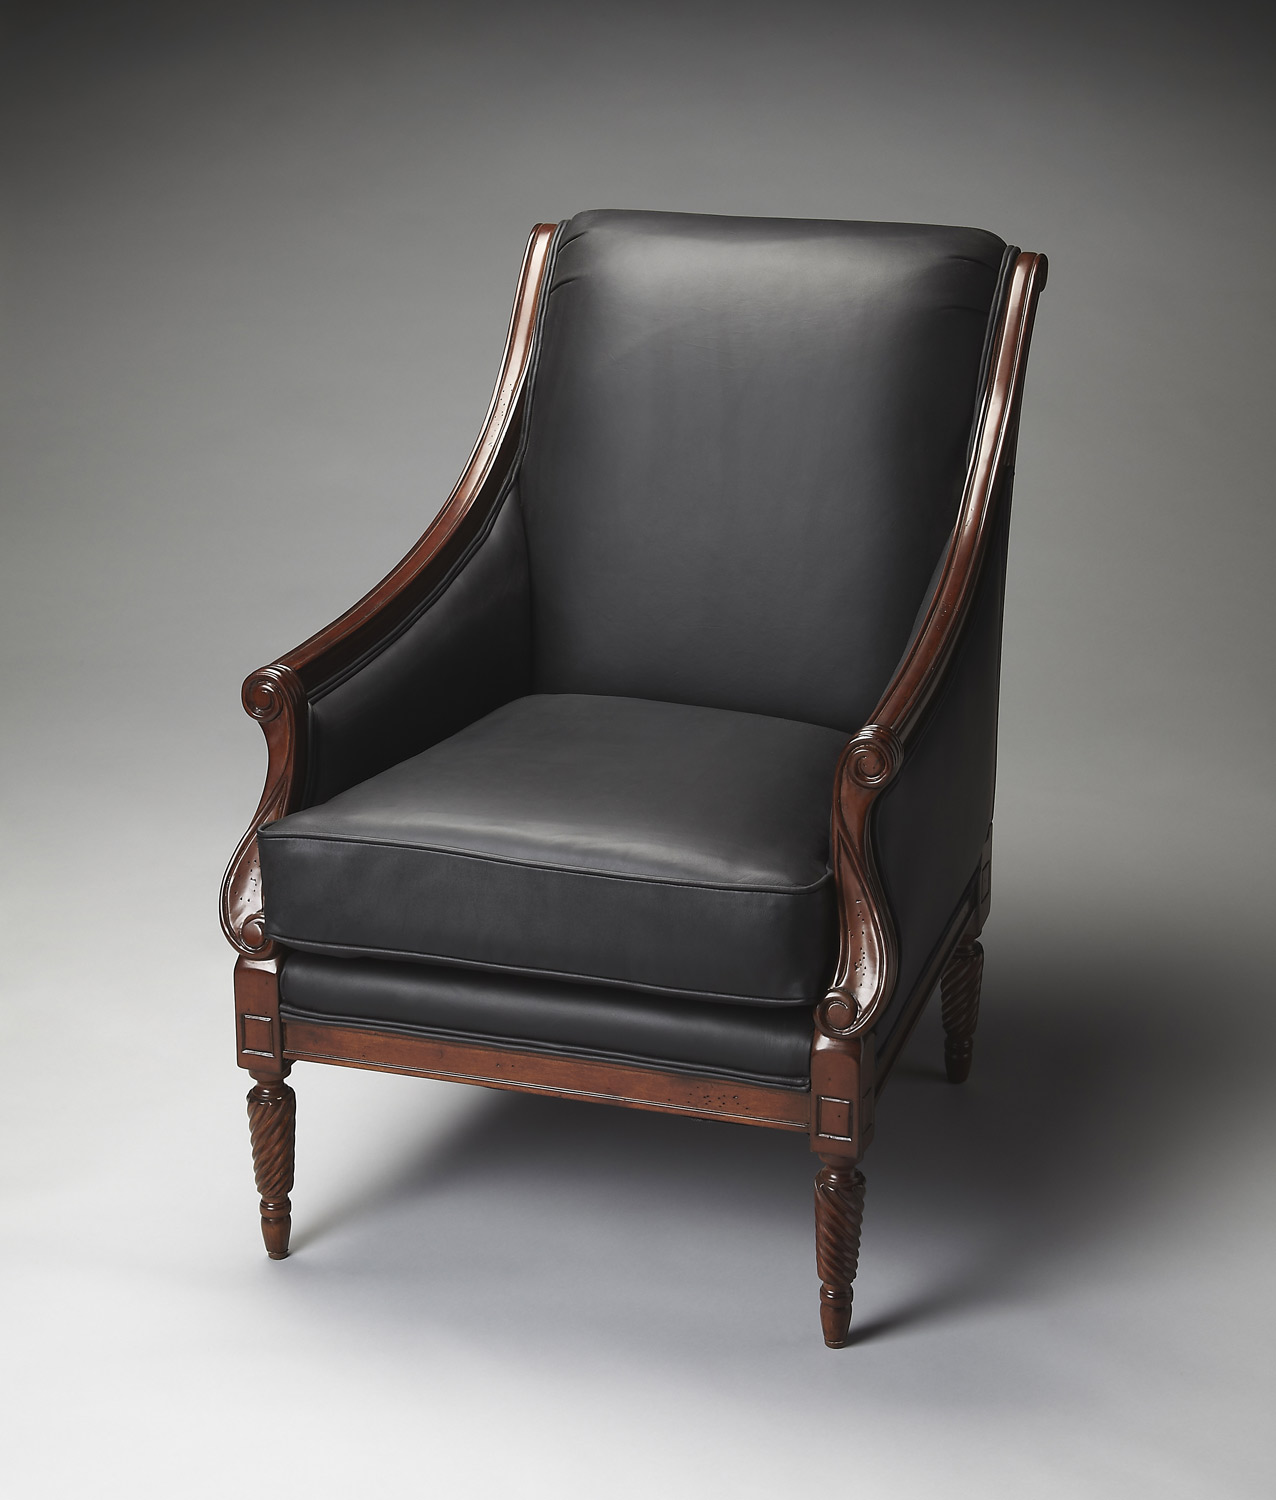 Butler 9504234 Accent Chair - Plantation Cherry